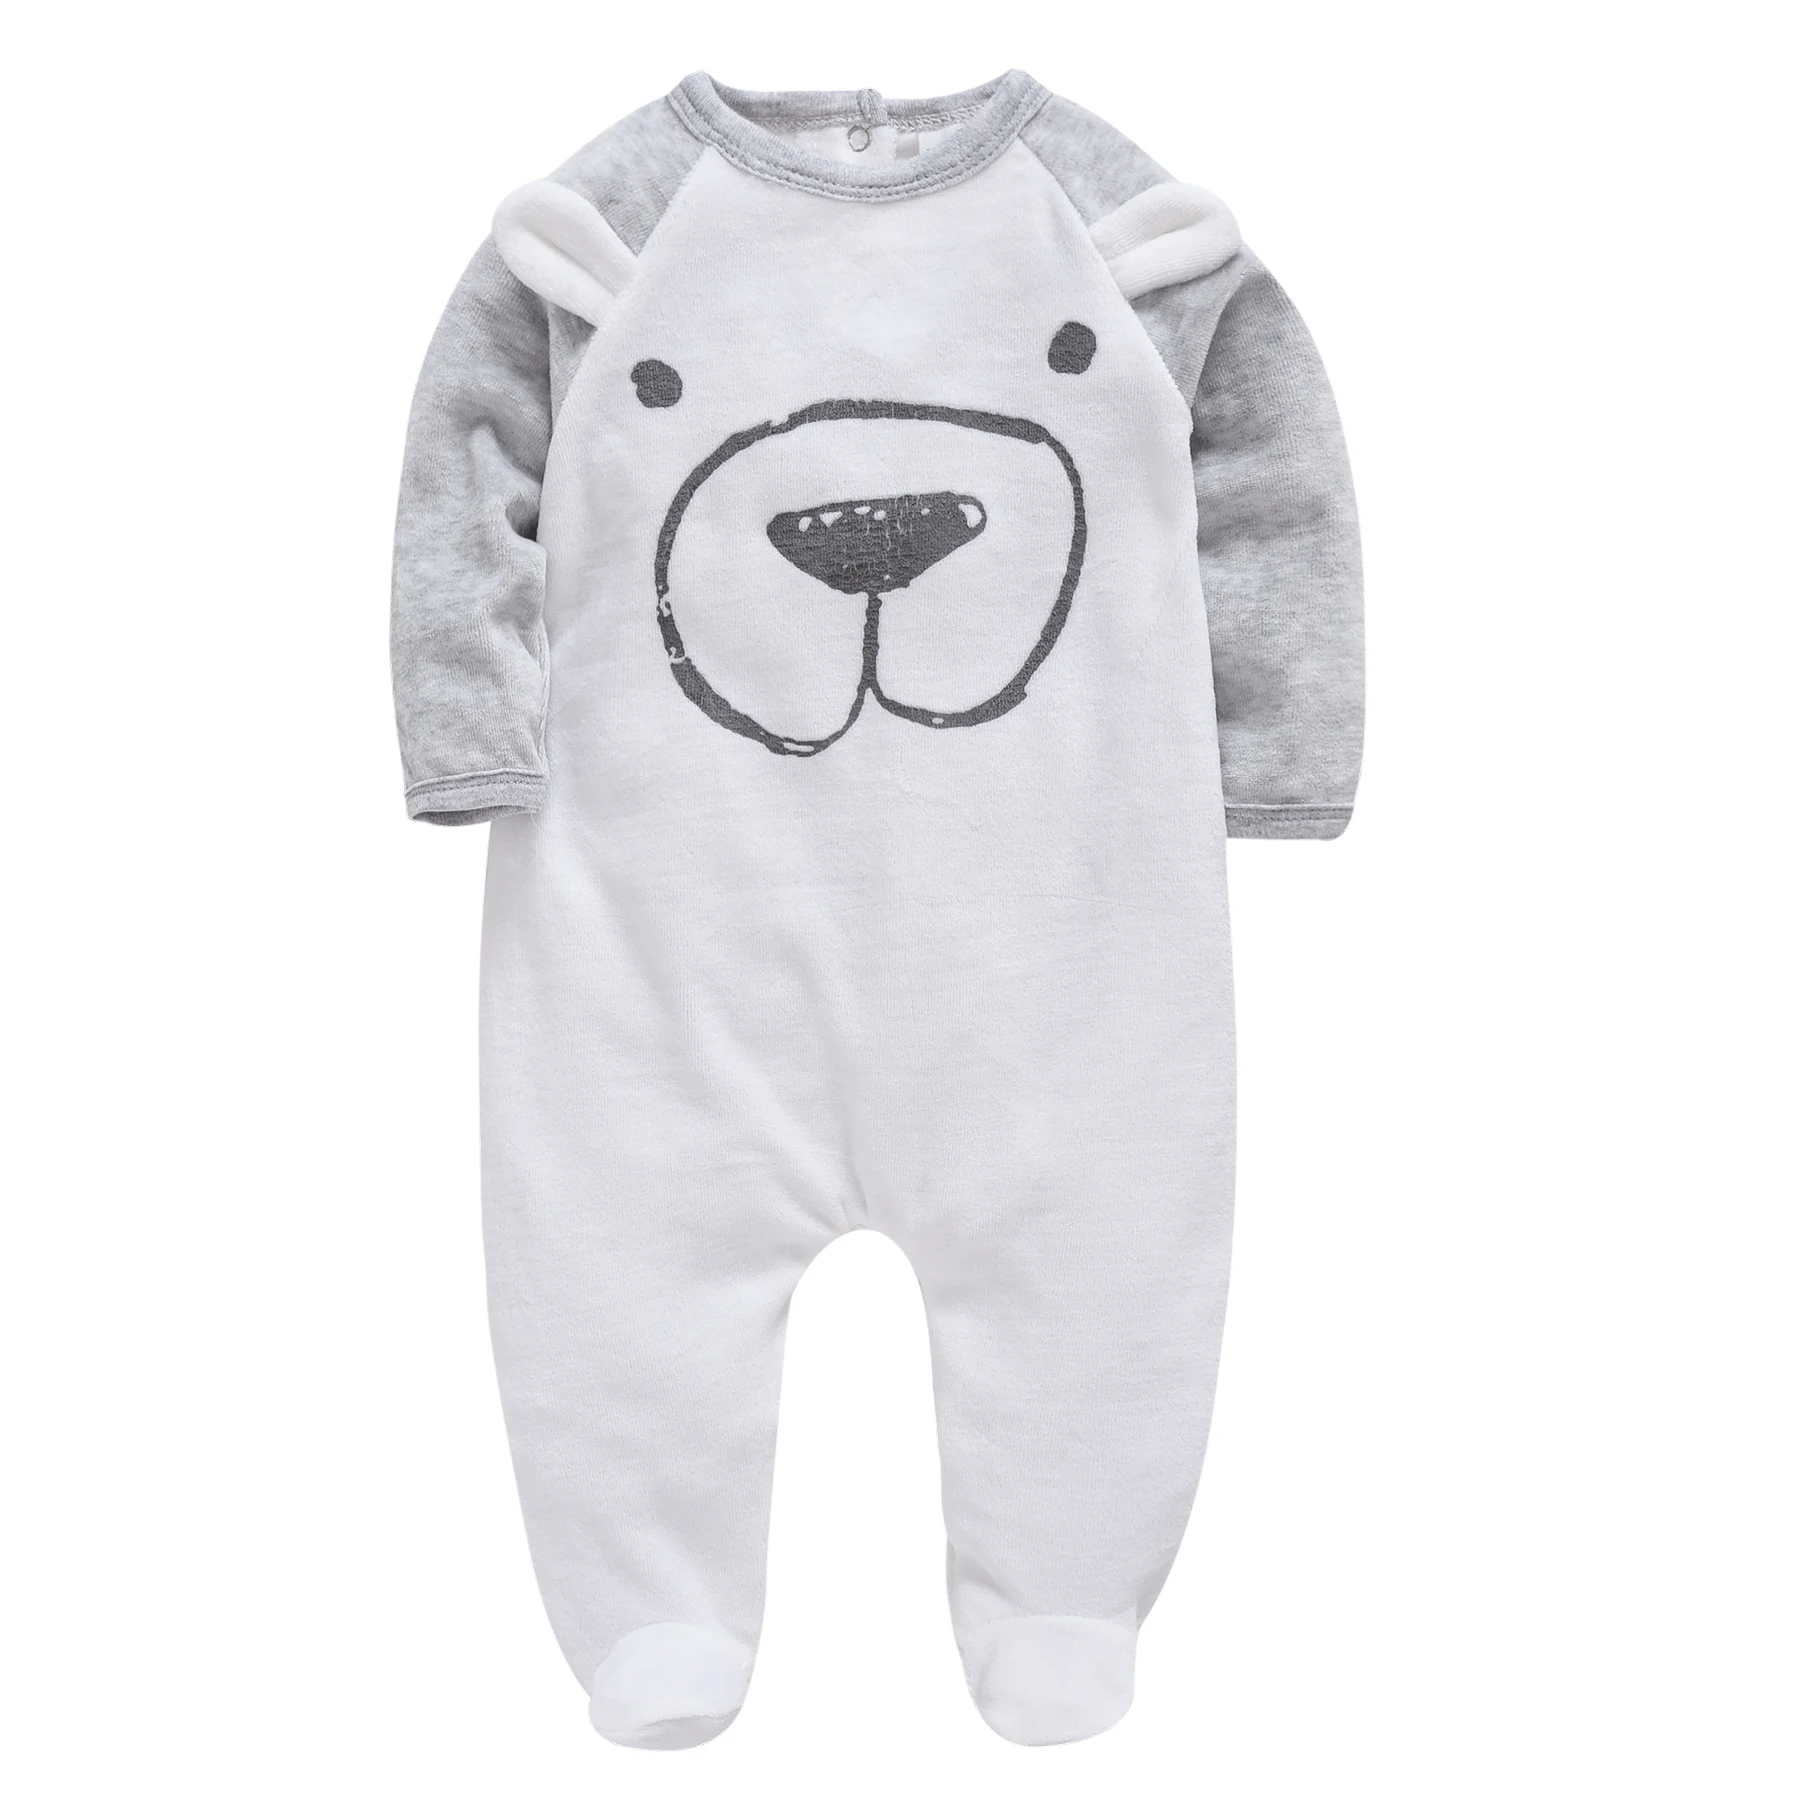 

Honeyzone Winter Pijama Bebe Recien Nacido Bear Print Newborn Baby Boy Clothes 0 3 Months Neonati Warm Baby Romper Bebe Fille